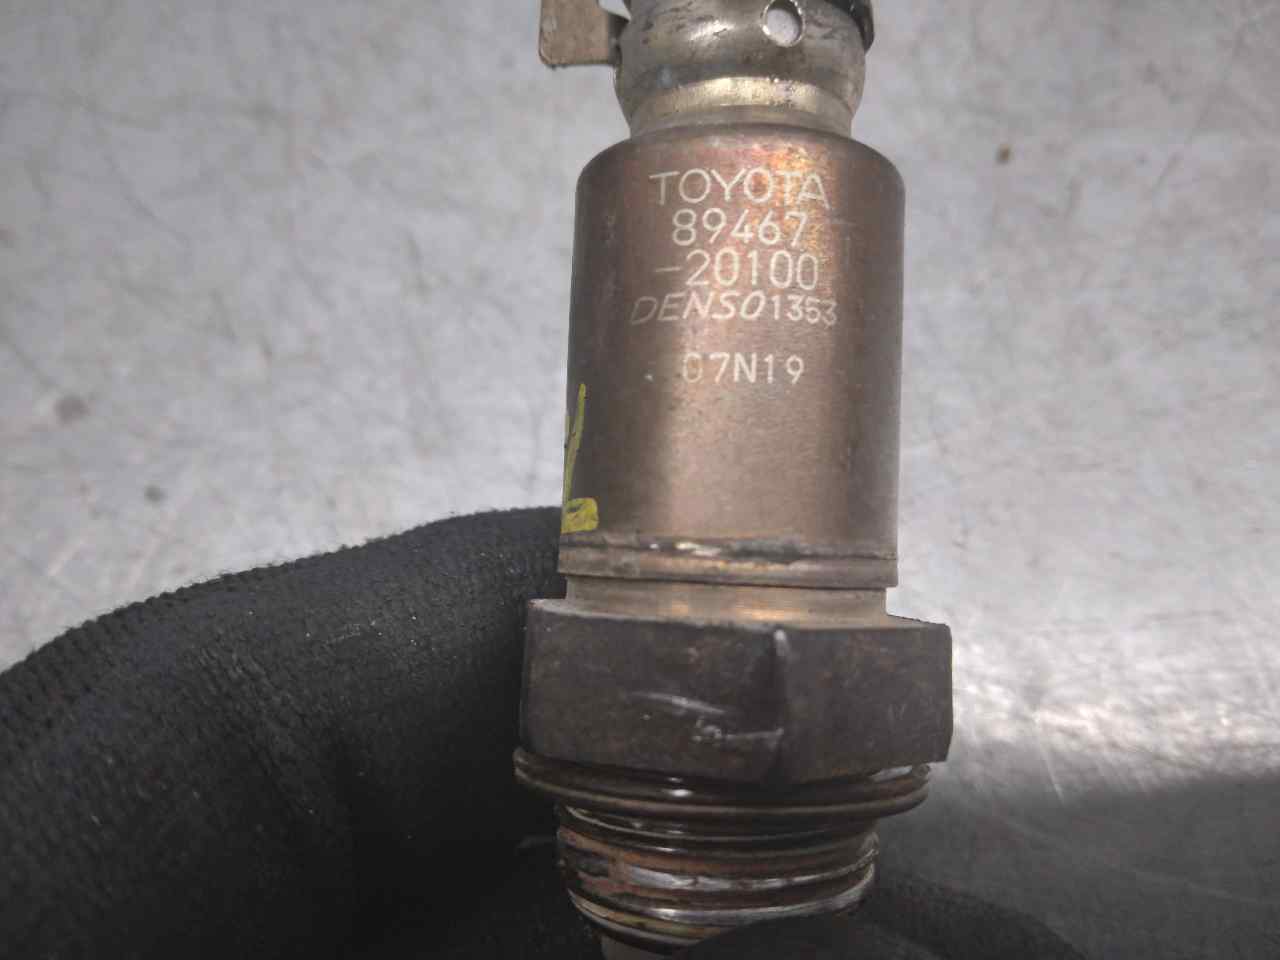 TOYOTA Avensis T27 Lambda Oxygen Sensor 8946720100, DENSO 19802576